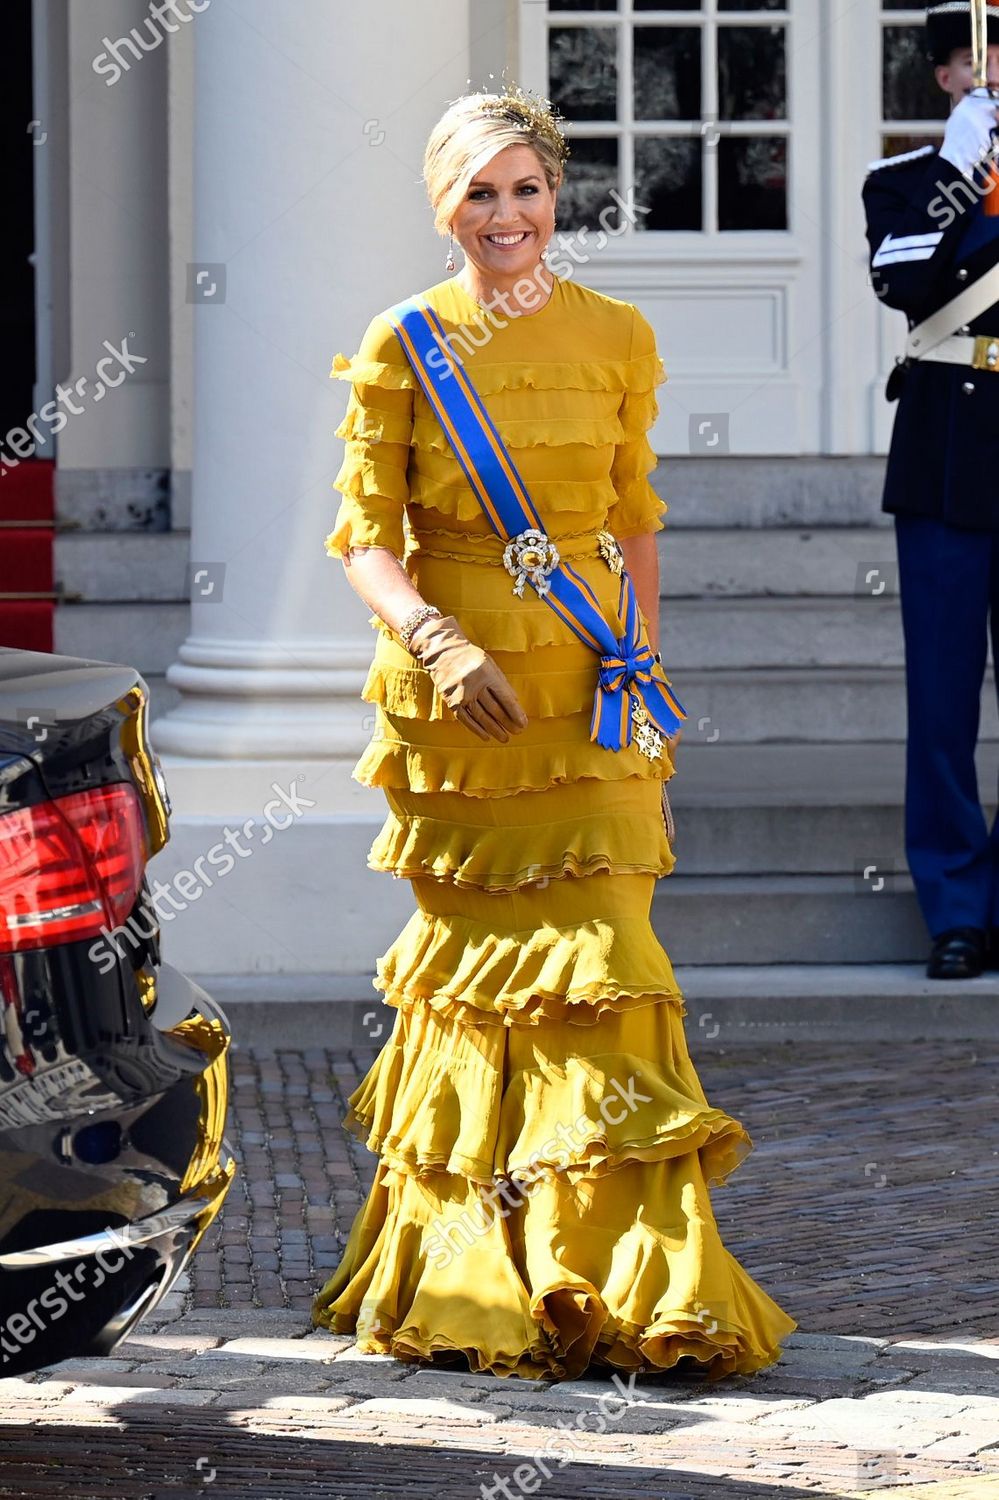 prinsjesdag-ceremony-the-hague-the-netherlands-shutterstock-editorial-10777335m.jpg